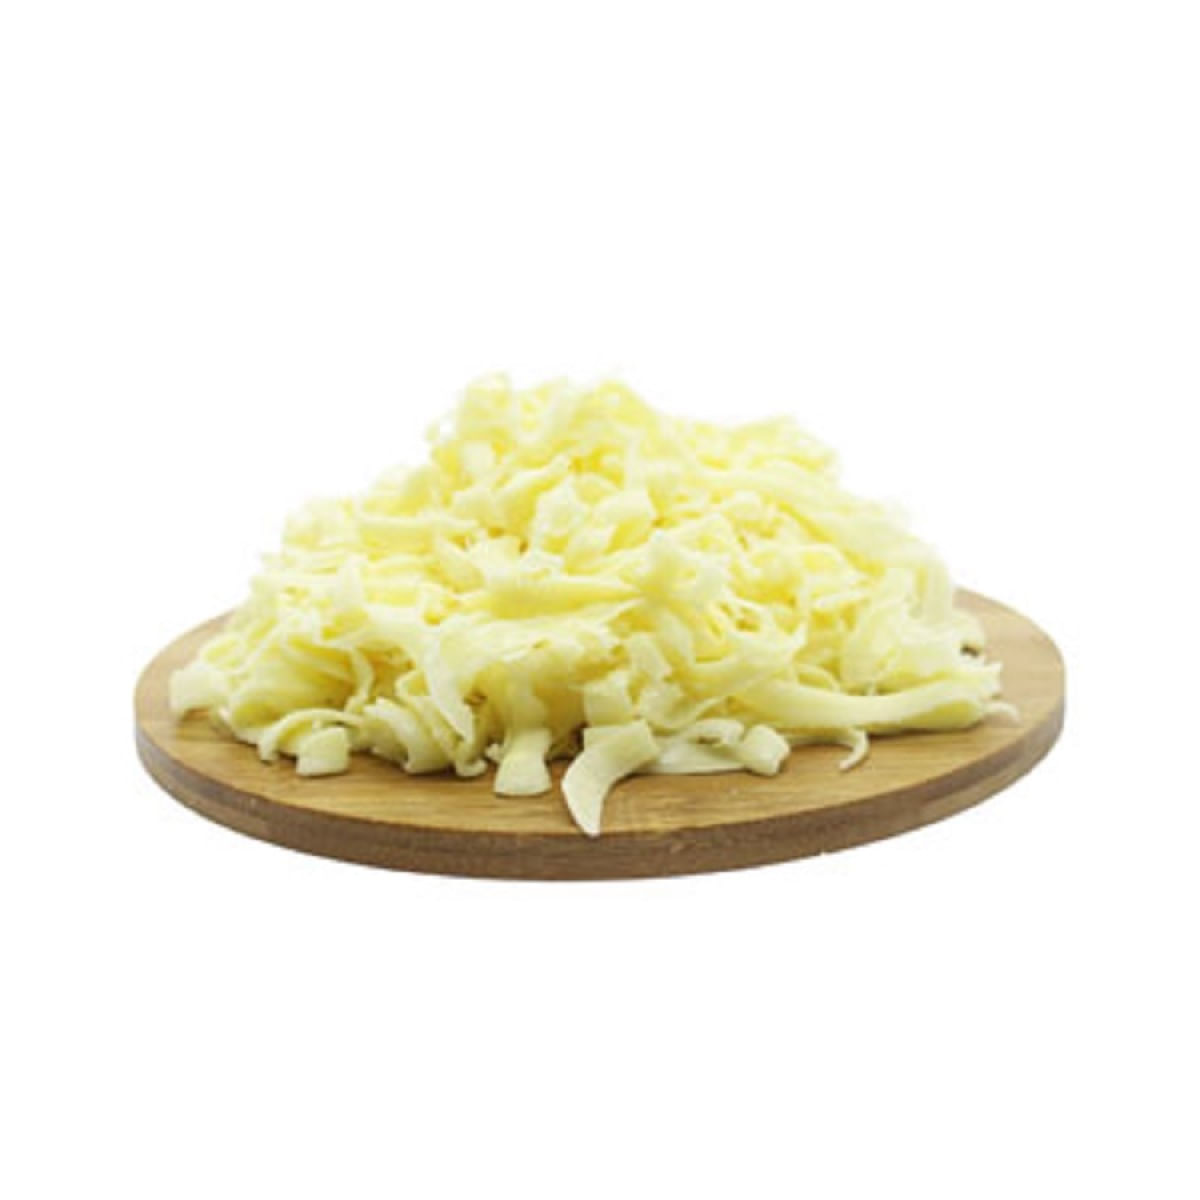 queijo-mussarela-importado-ralado-kg-1.jpg